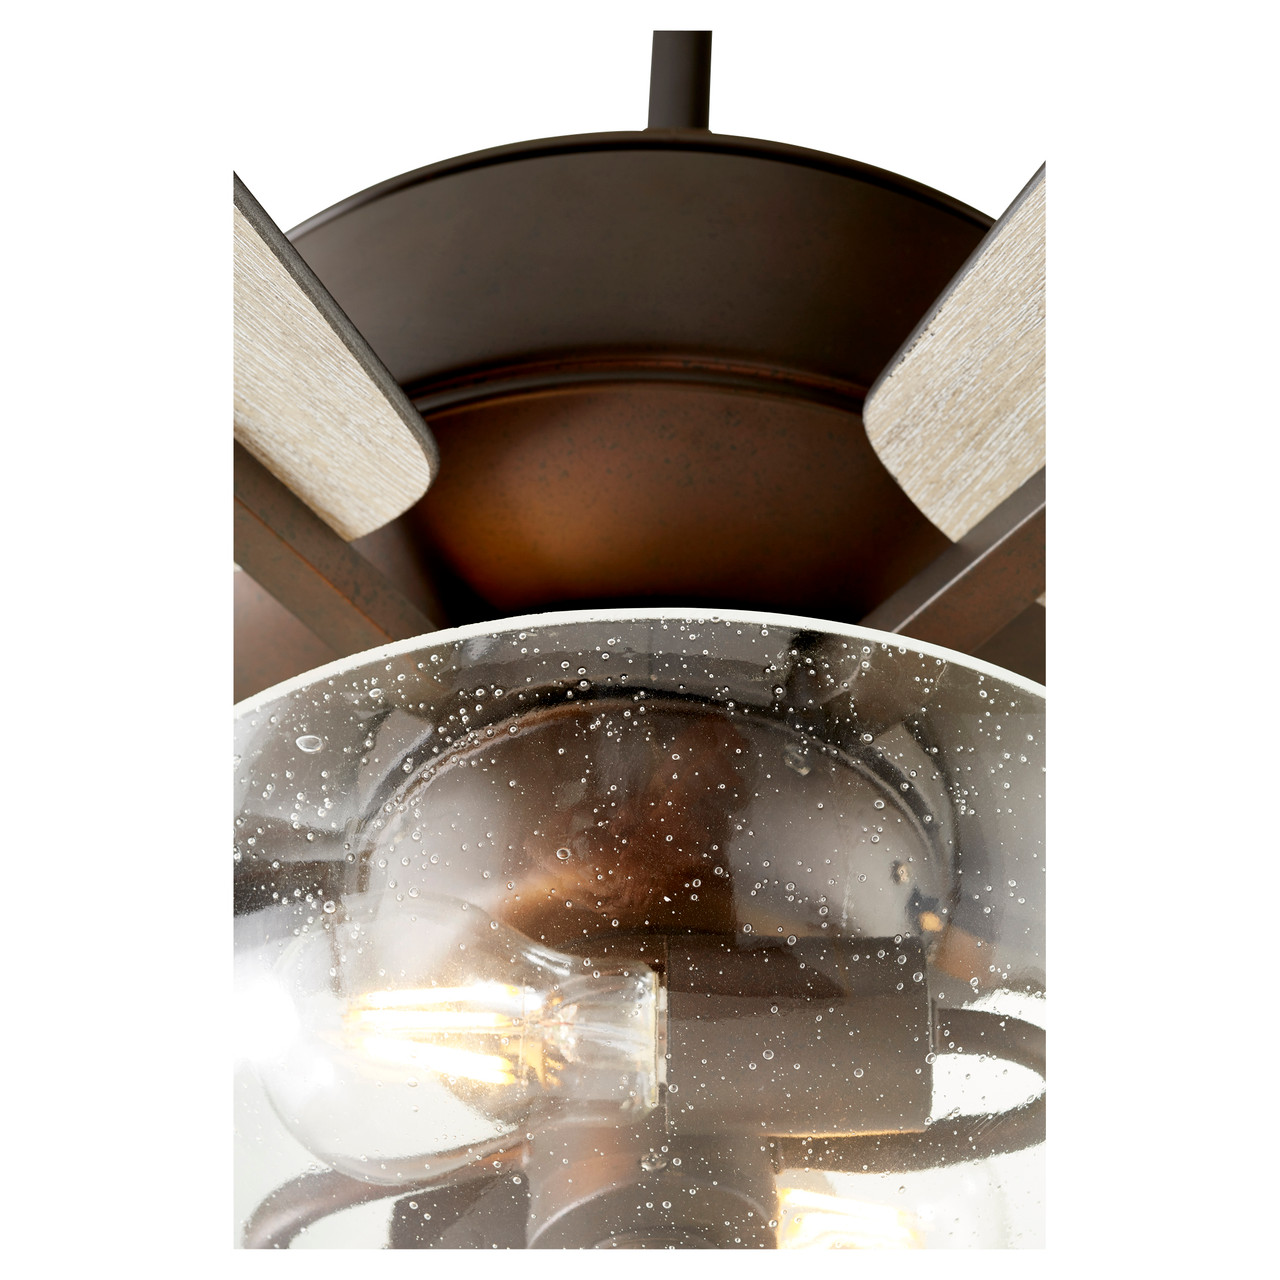 QUORUM INTERNATIONAL 7052-286 Breeze 2-Light Ceiling Fan, Oiled Bronze